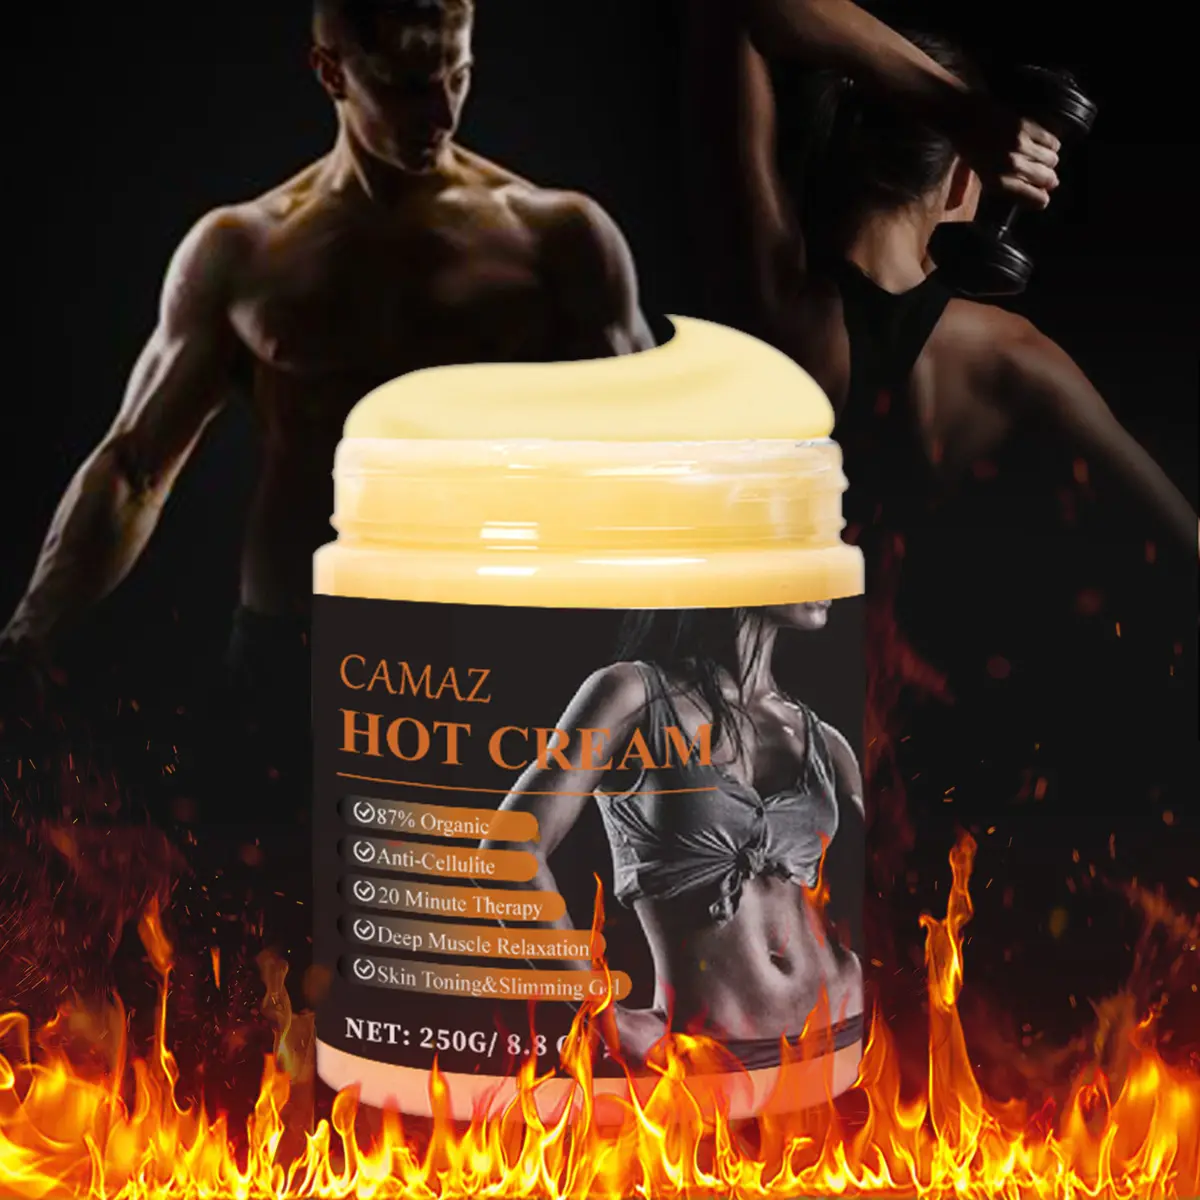 CAMAZ Hot Cream Fat Burner Body Slimming Cream For Belly Fat Burner Body Shape Anti Cellulite For Weight Loss